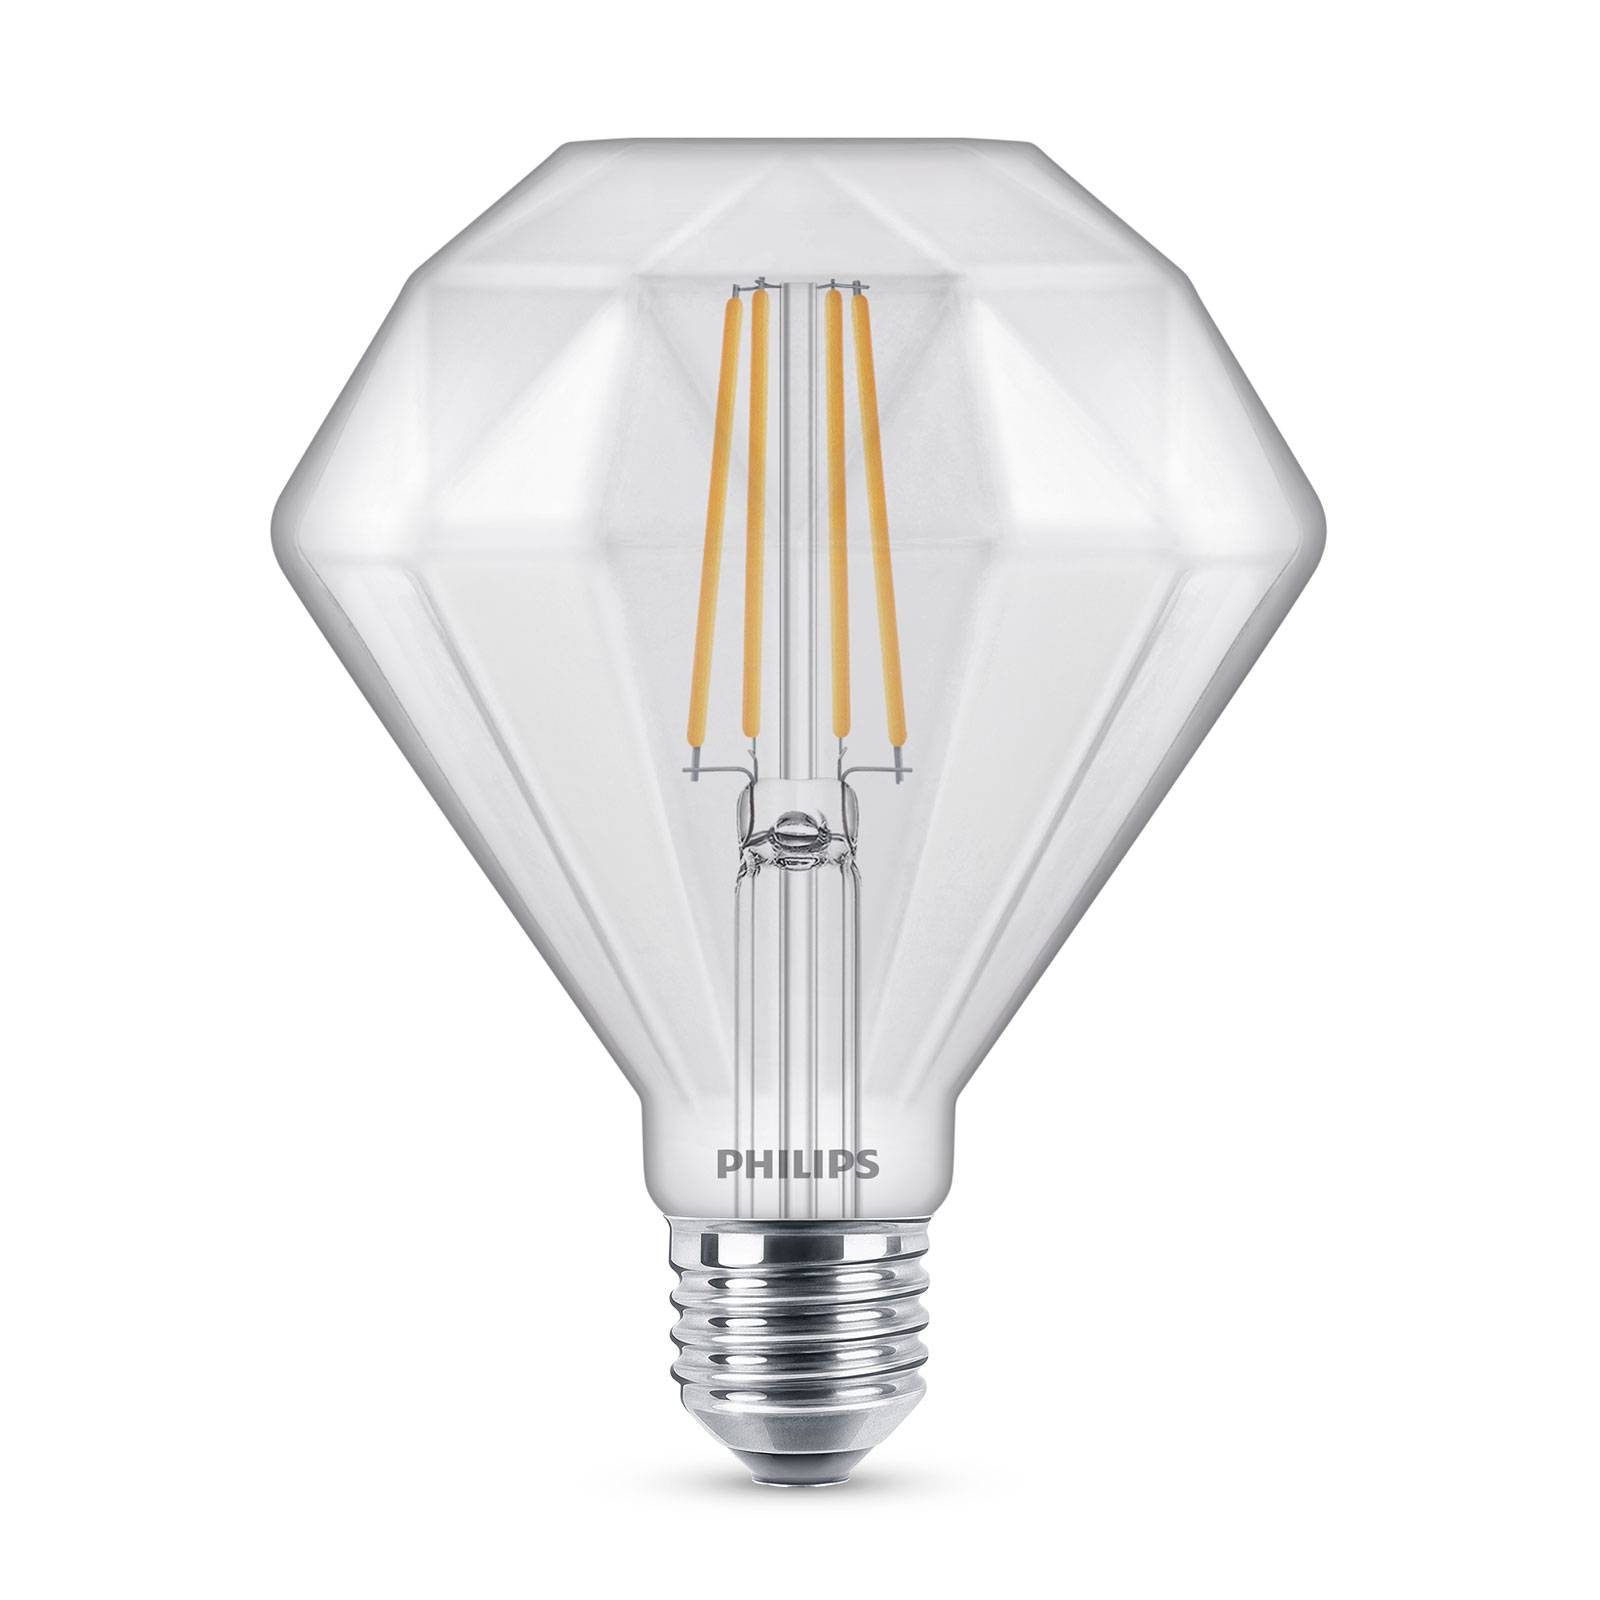 Philips Classic Diamond LED žiarovka E27 5W